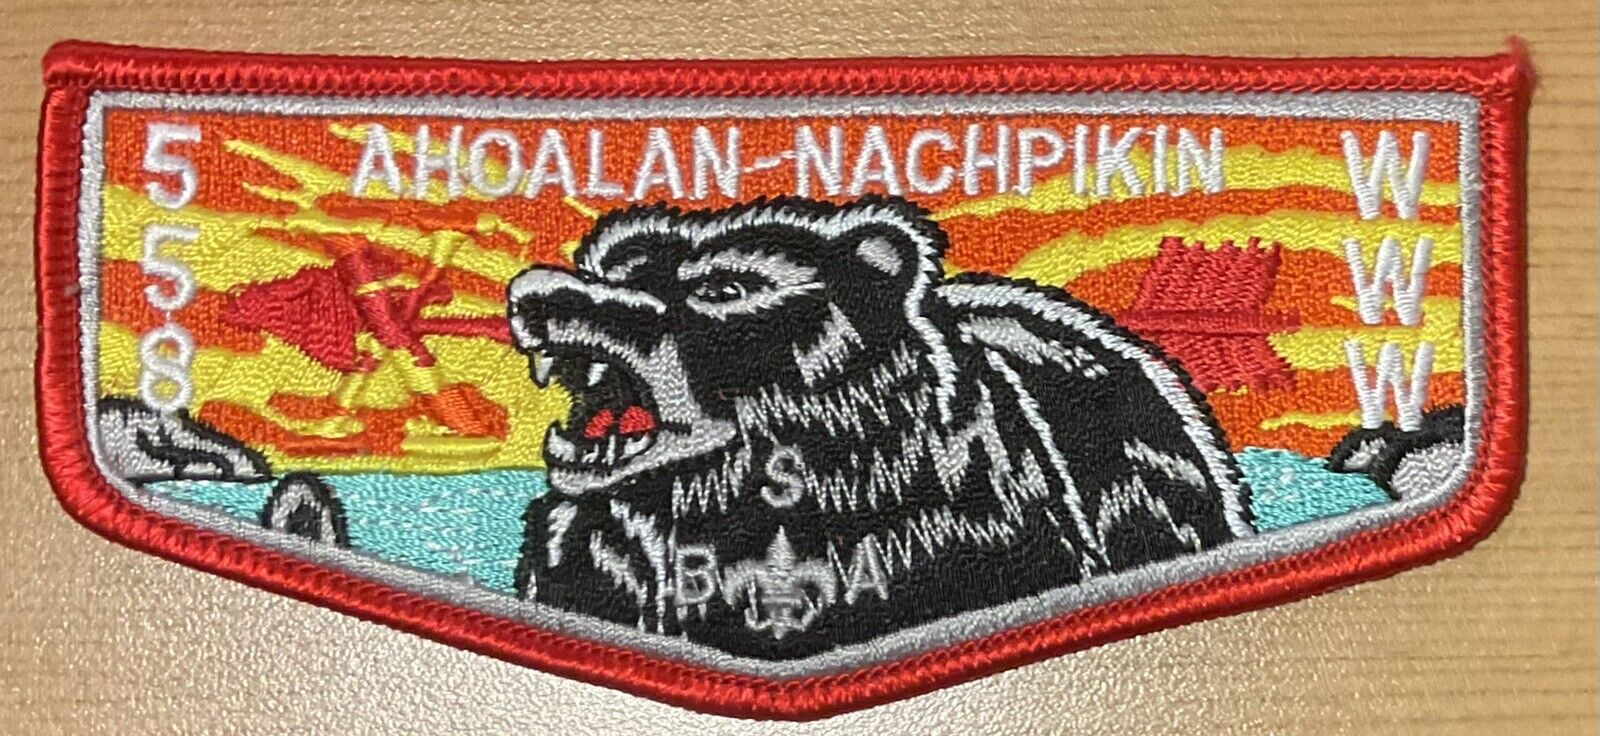 Boy Scout Ahoalan-Nachpikin oa lodge 558 10th (22-23)